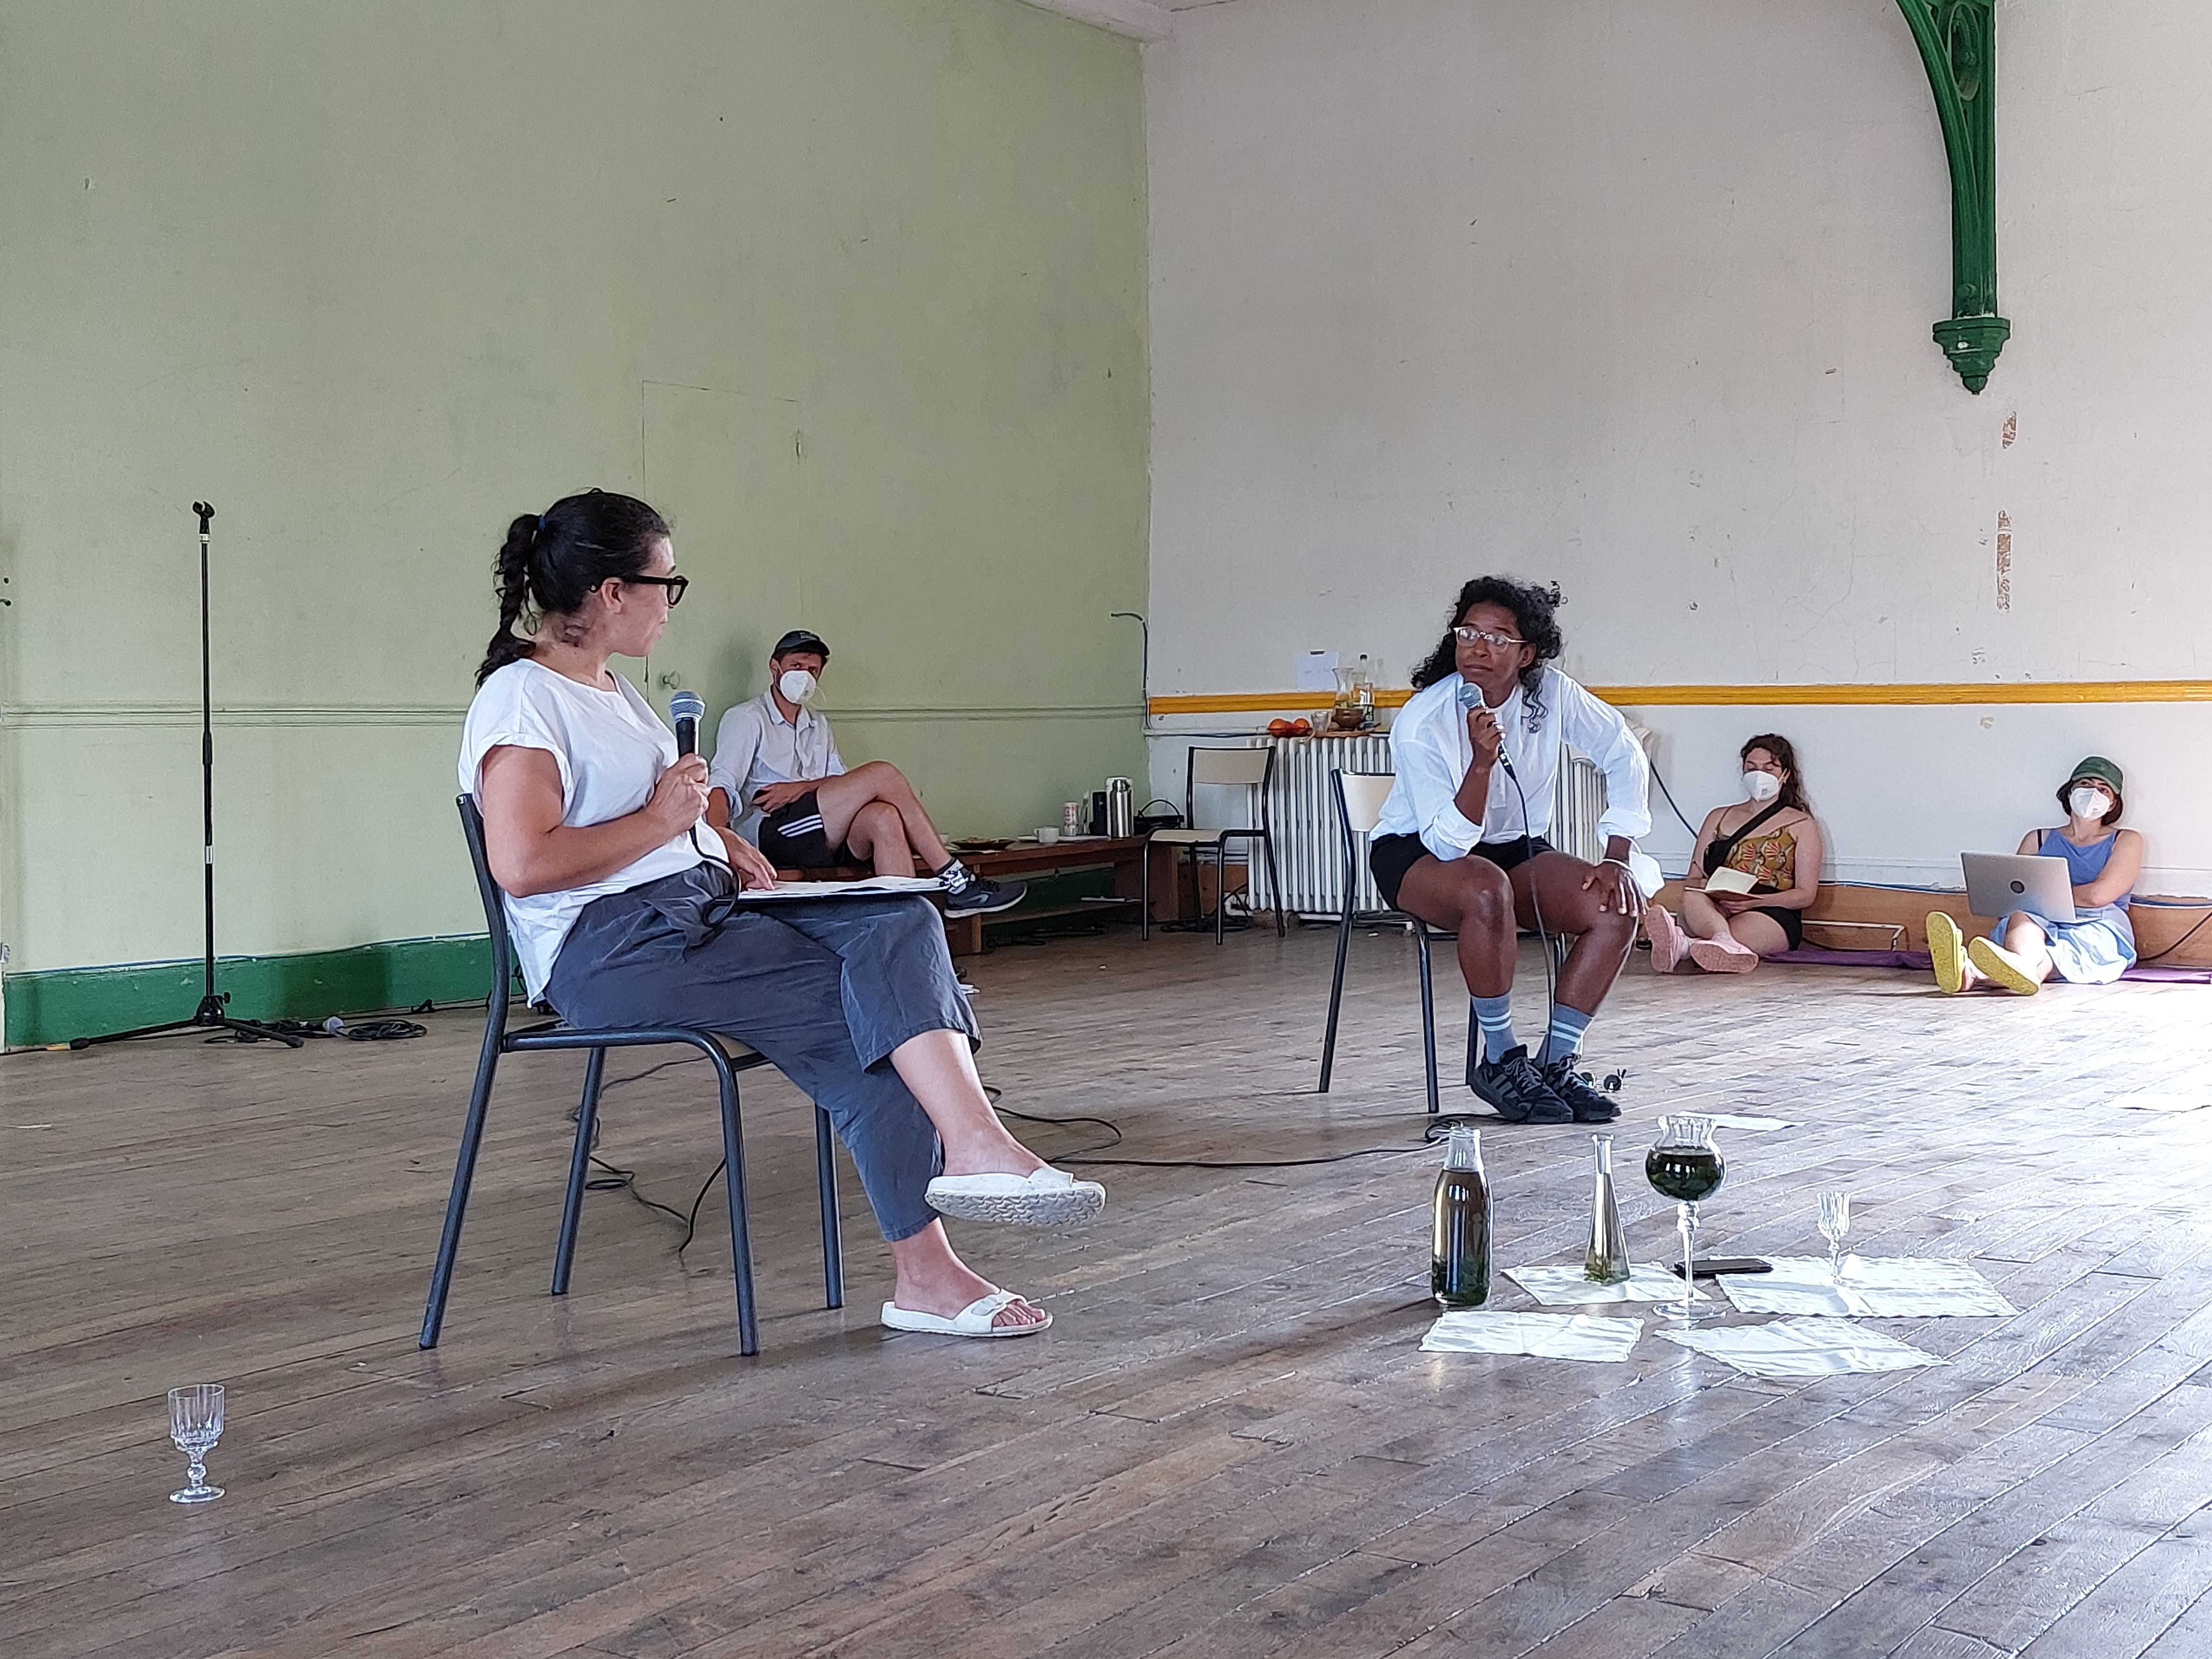 Manuela Moscoso & Taylor Le Melle responding to Anna Piroska Tóth's KITCHEN presentation. PAF, July 2021. Photo credits: Nikos Doulos